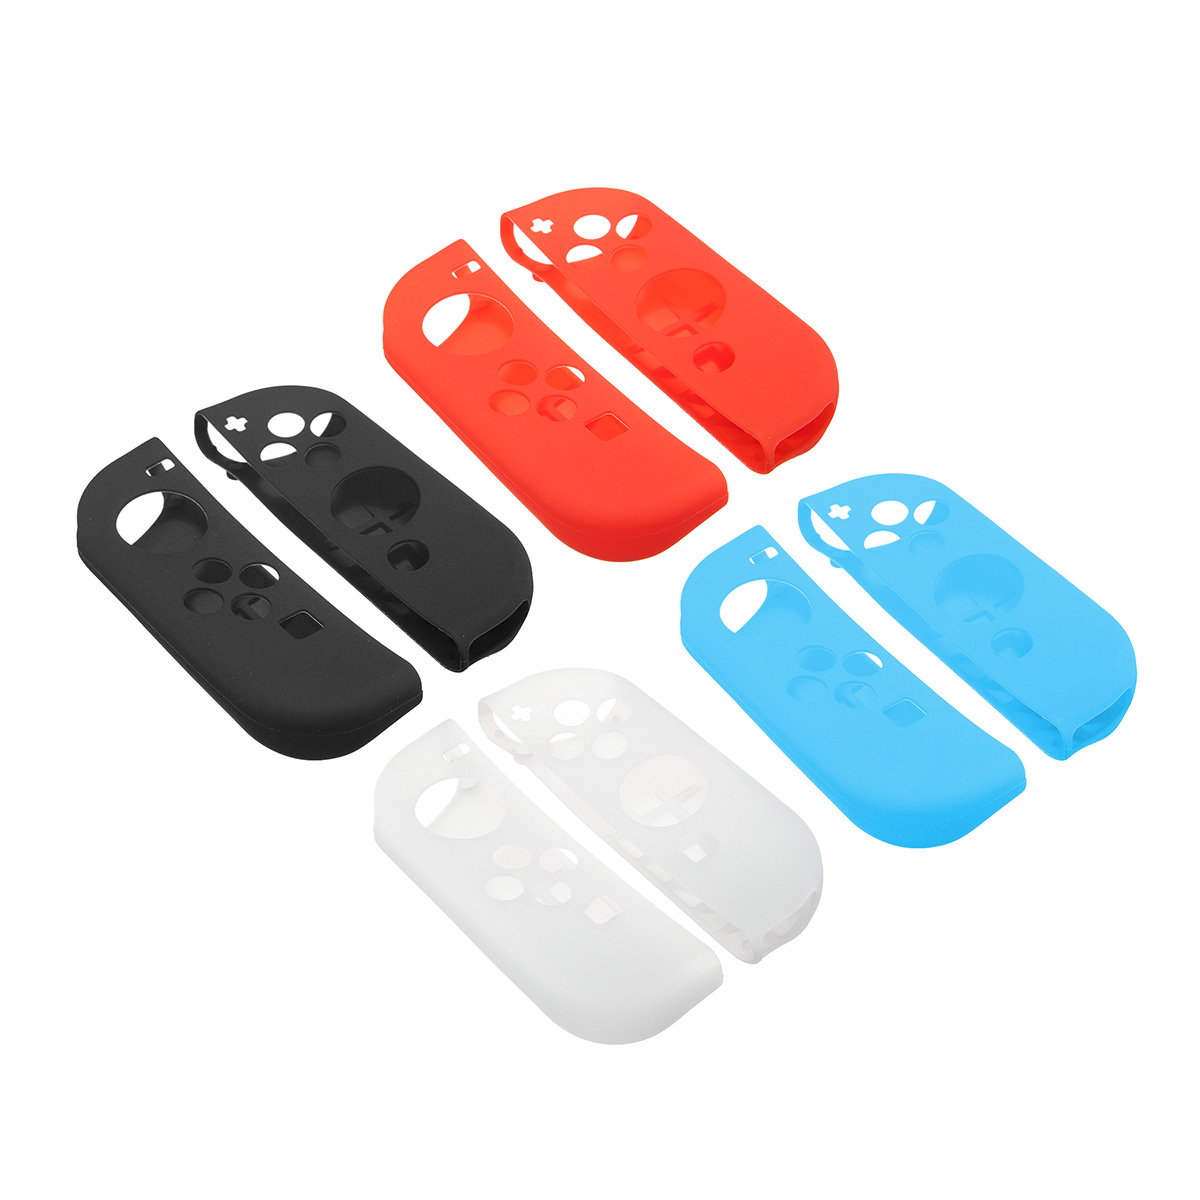 Silicon Case Protective Impact Resistant Rubber Skin Cover For Nintendo Switch Joy-Con Controller 73